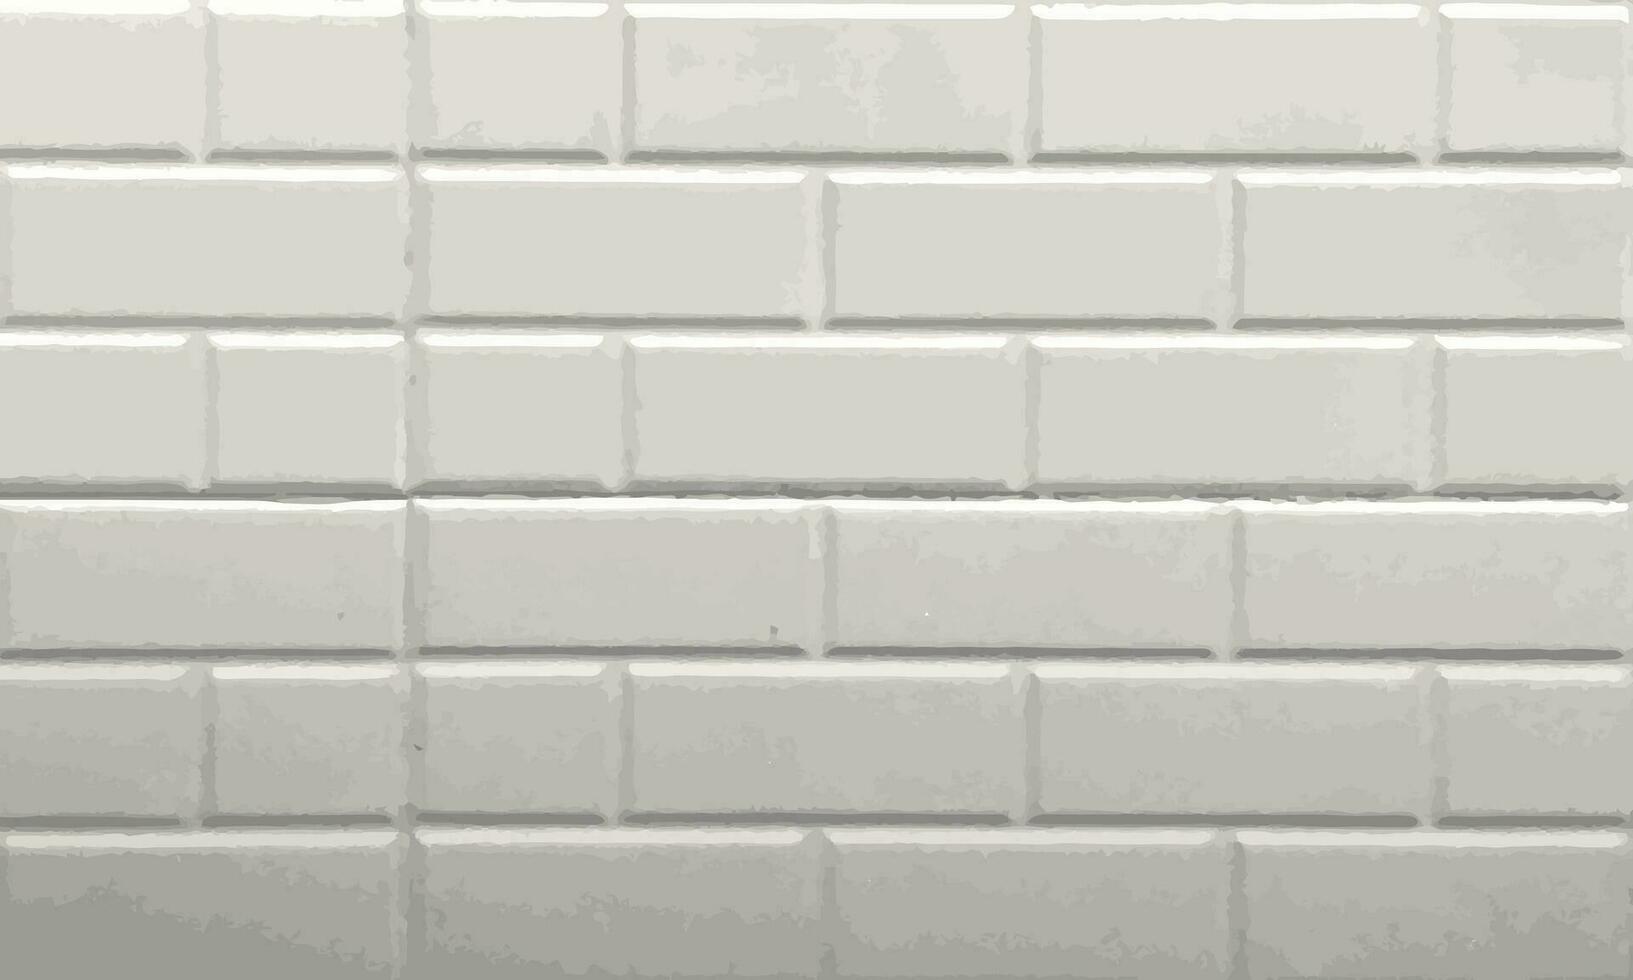 wit steen muur structuur vector achtergrond. detailopname steen muur oppervlak, realistisch vector steen muur patroon horizontaal achtergrond